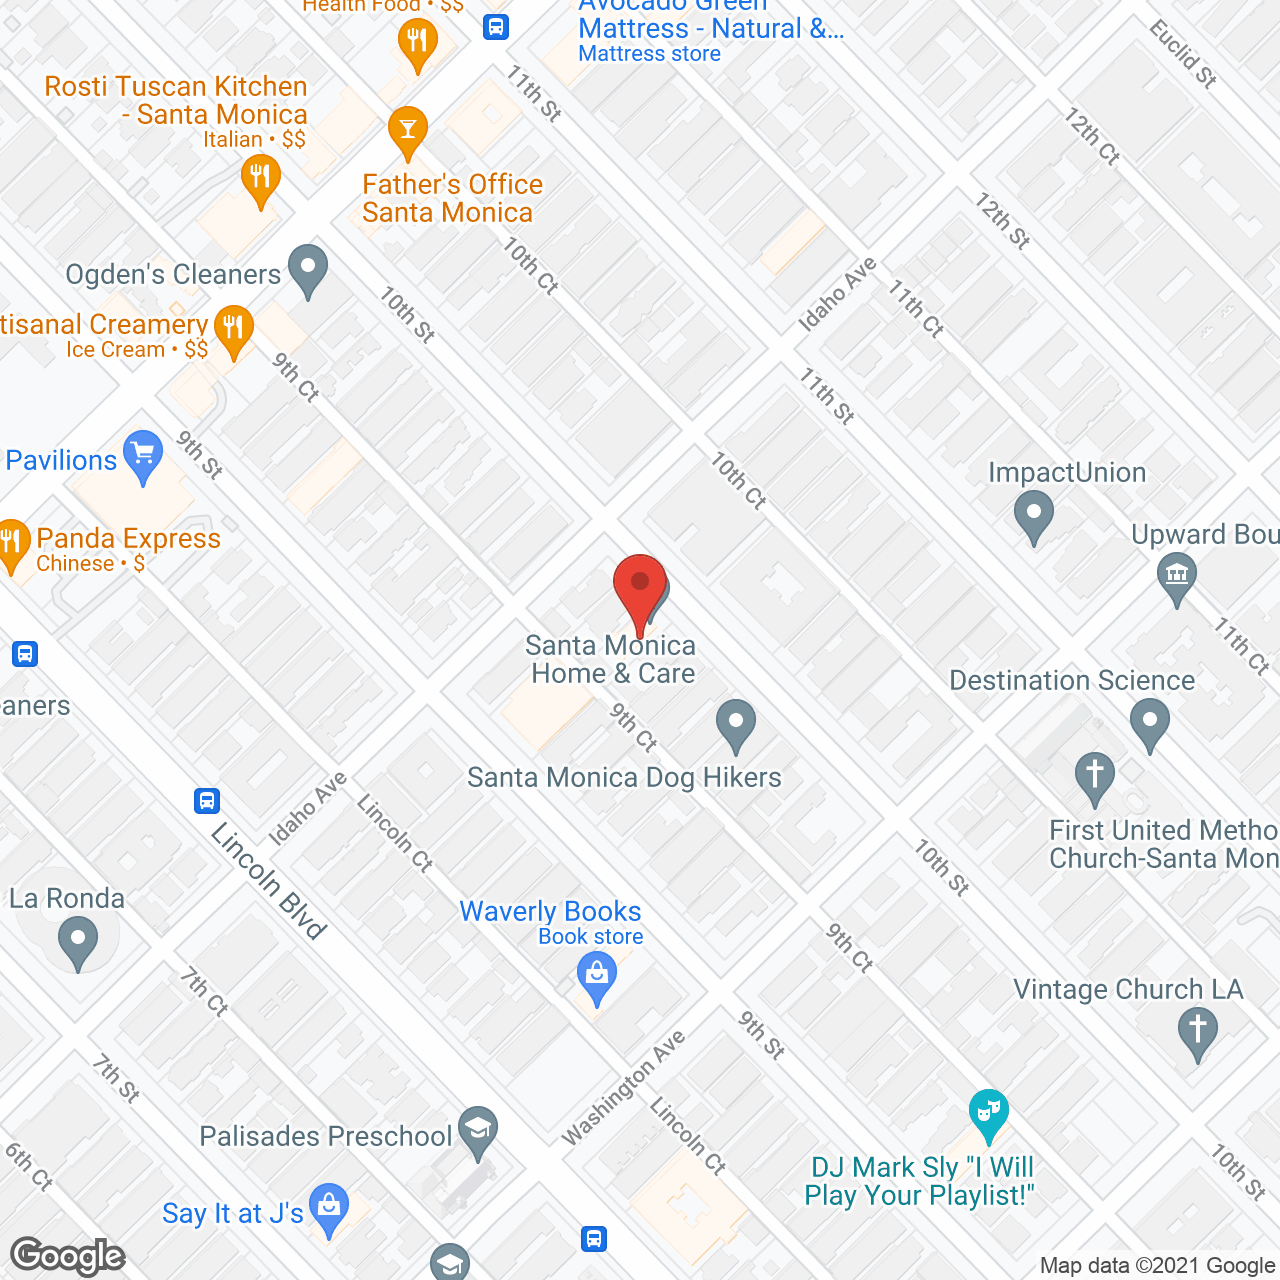 Santa Monica Home & Care in google map